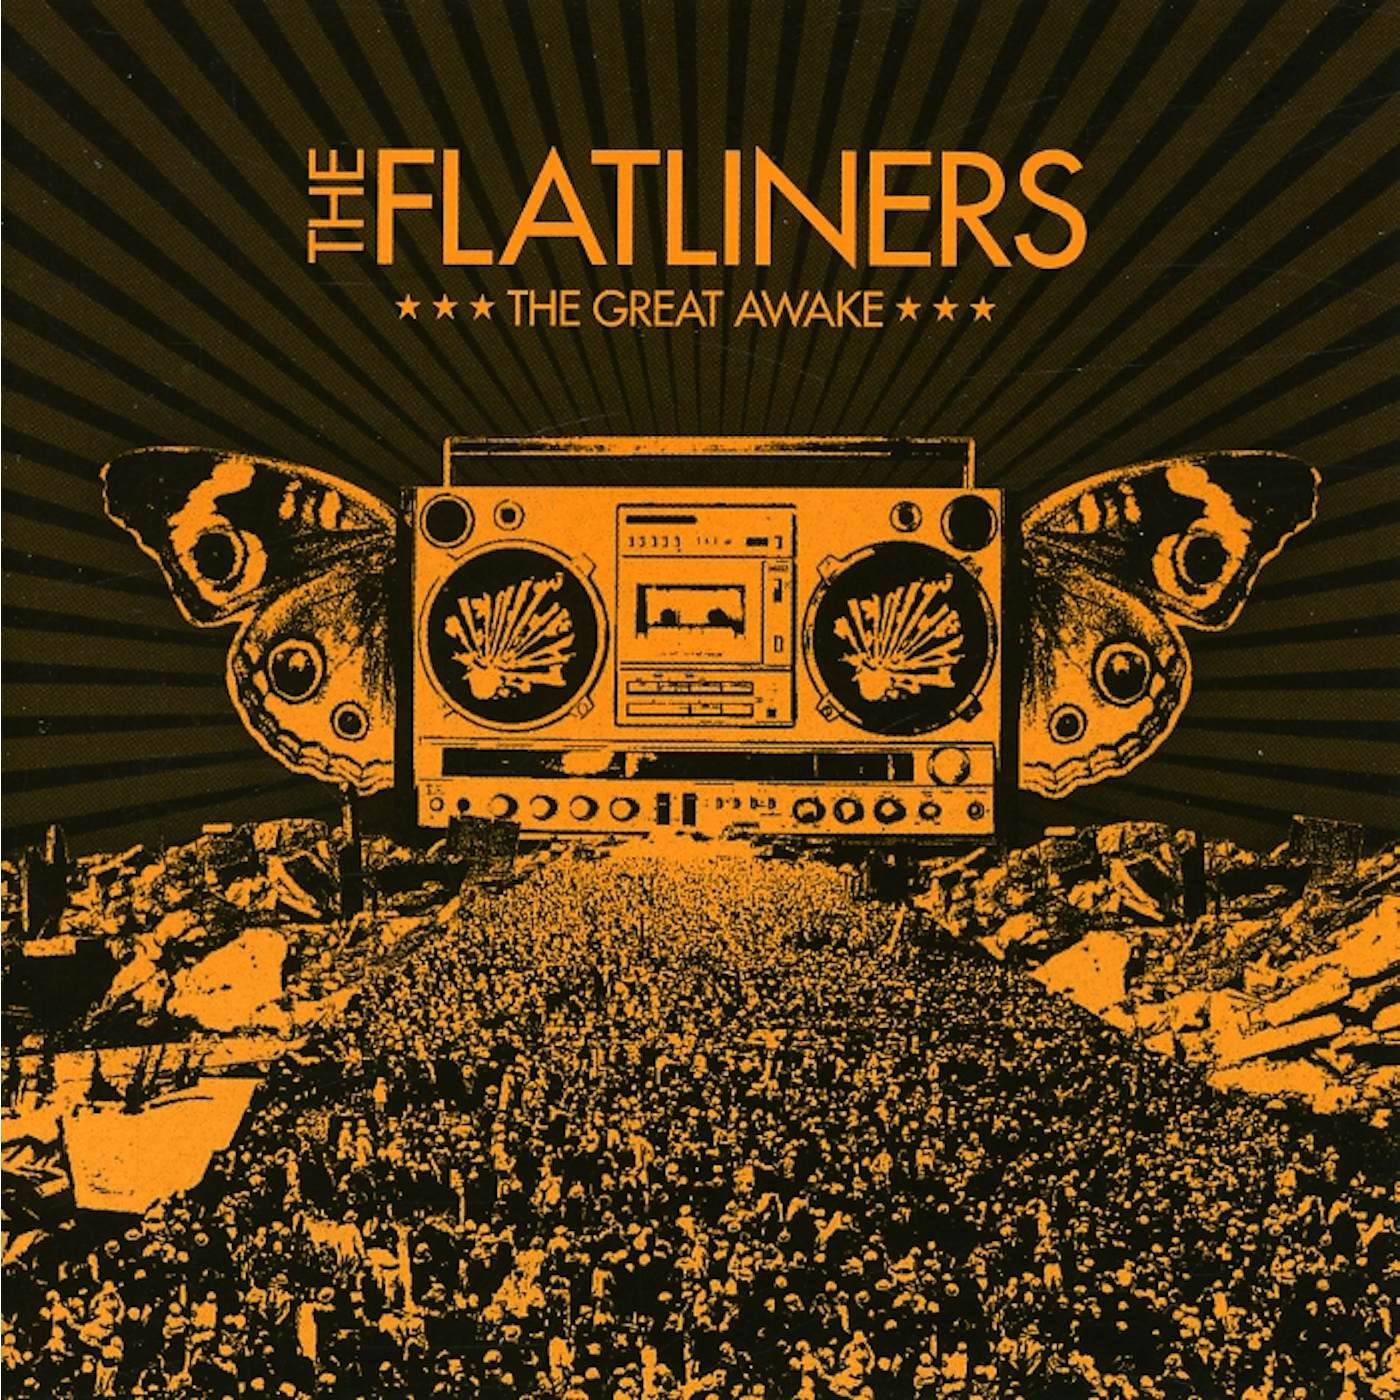 The Flatliners GREAT AWAKE CD